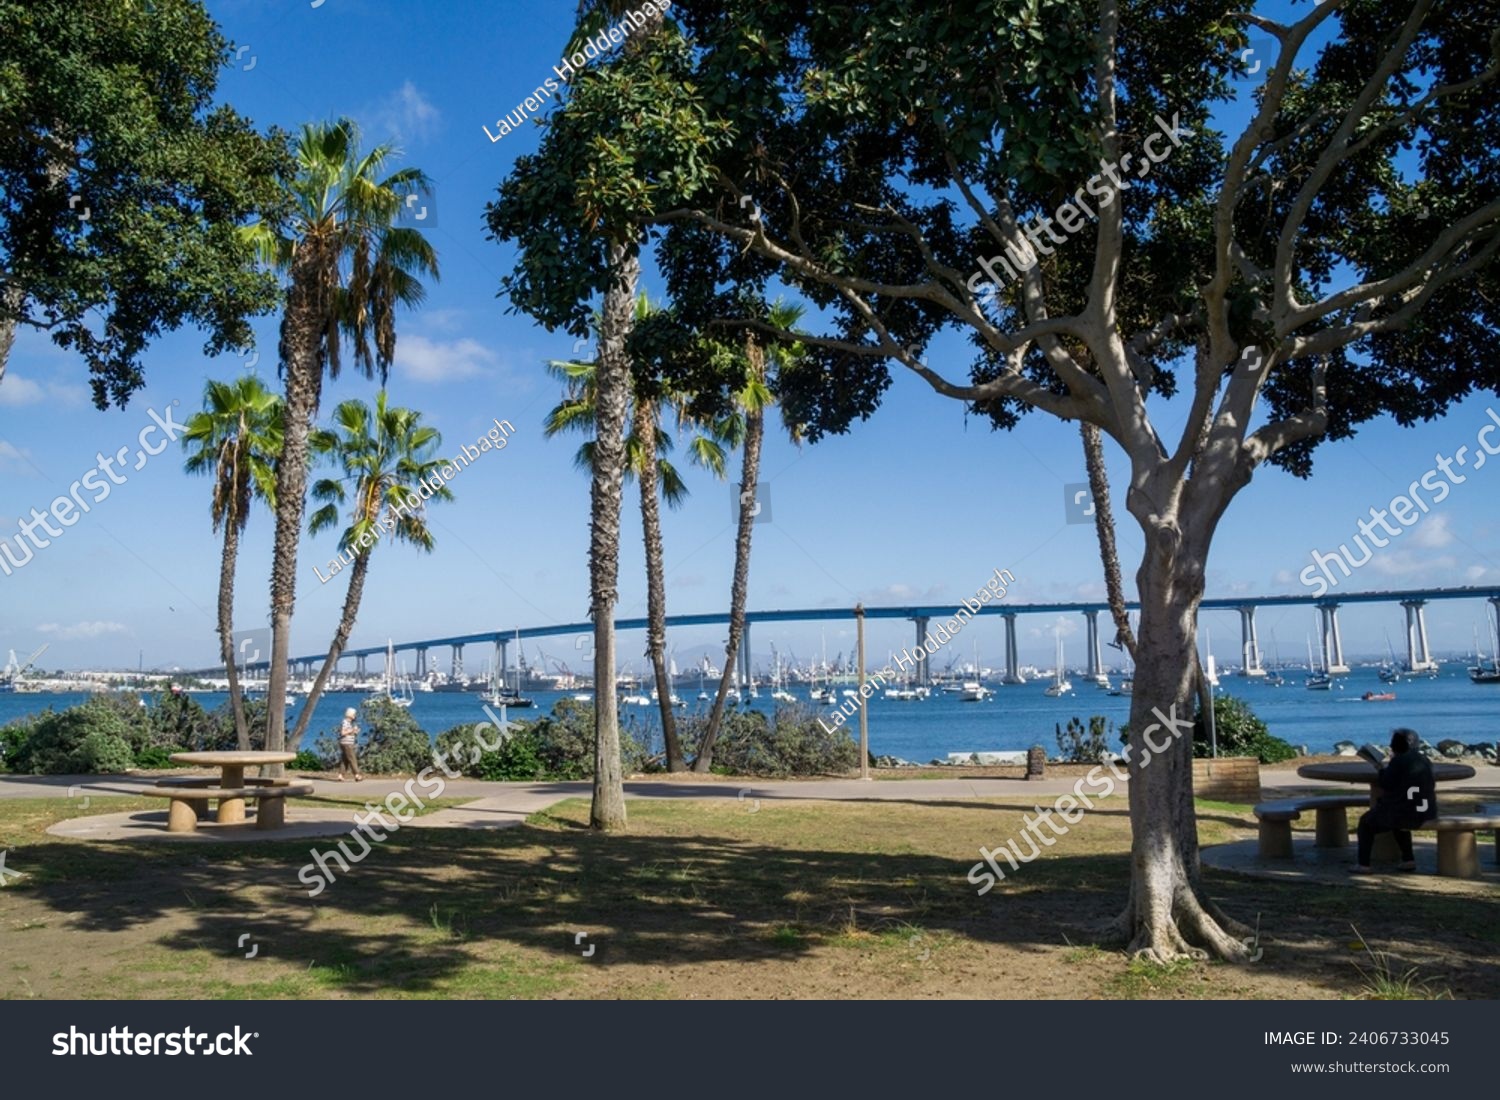 The San Diego-Coronado bridge, Palm trees in the foreground, view from Coronado Tidelands Park, CA, USA #2406733045